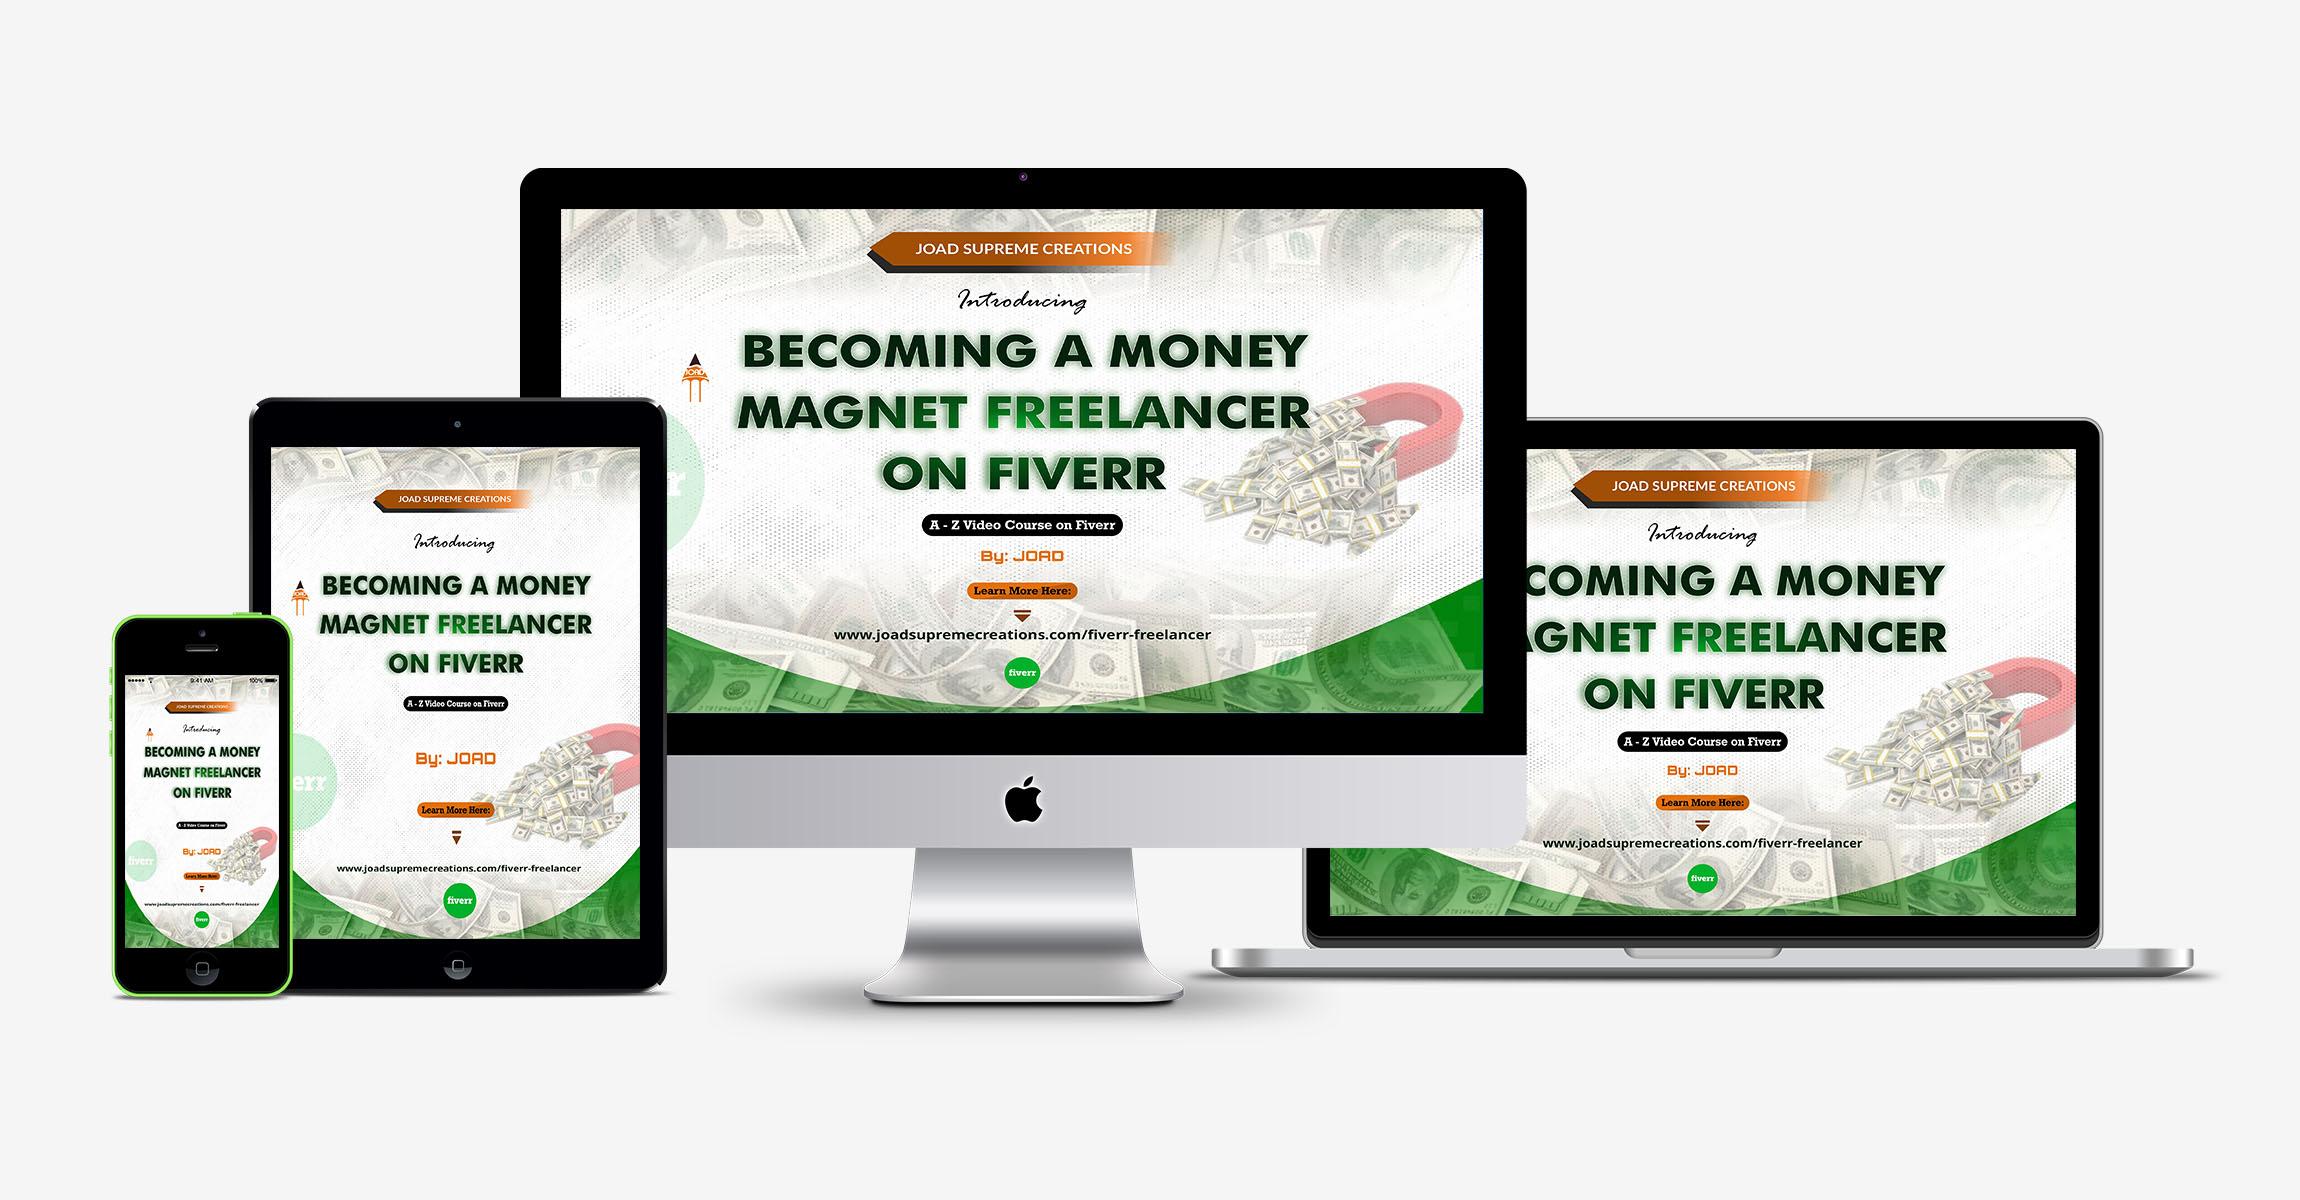 Becoming a money magnet freelancer on Fiverr